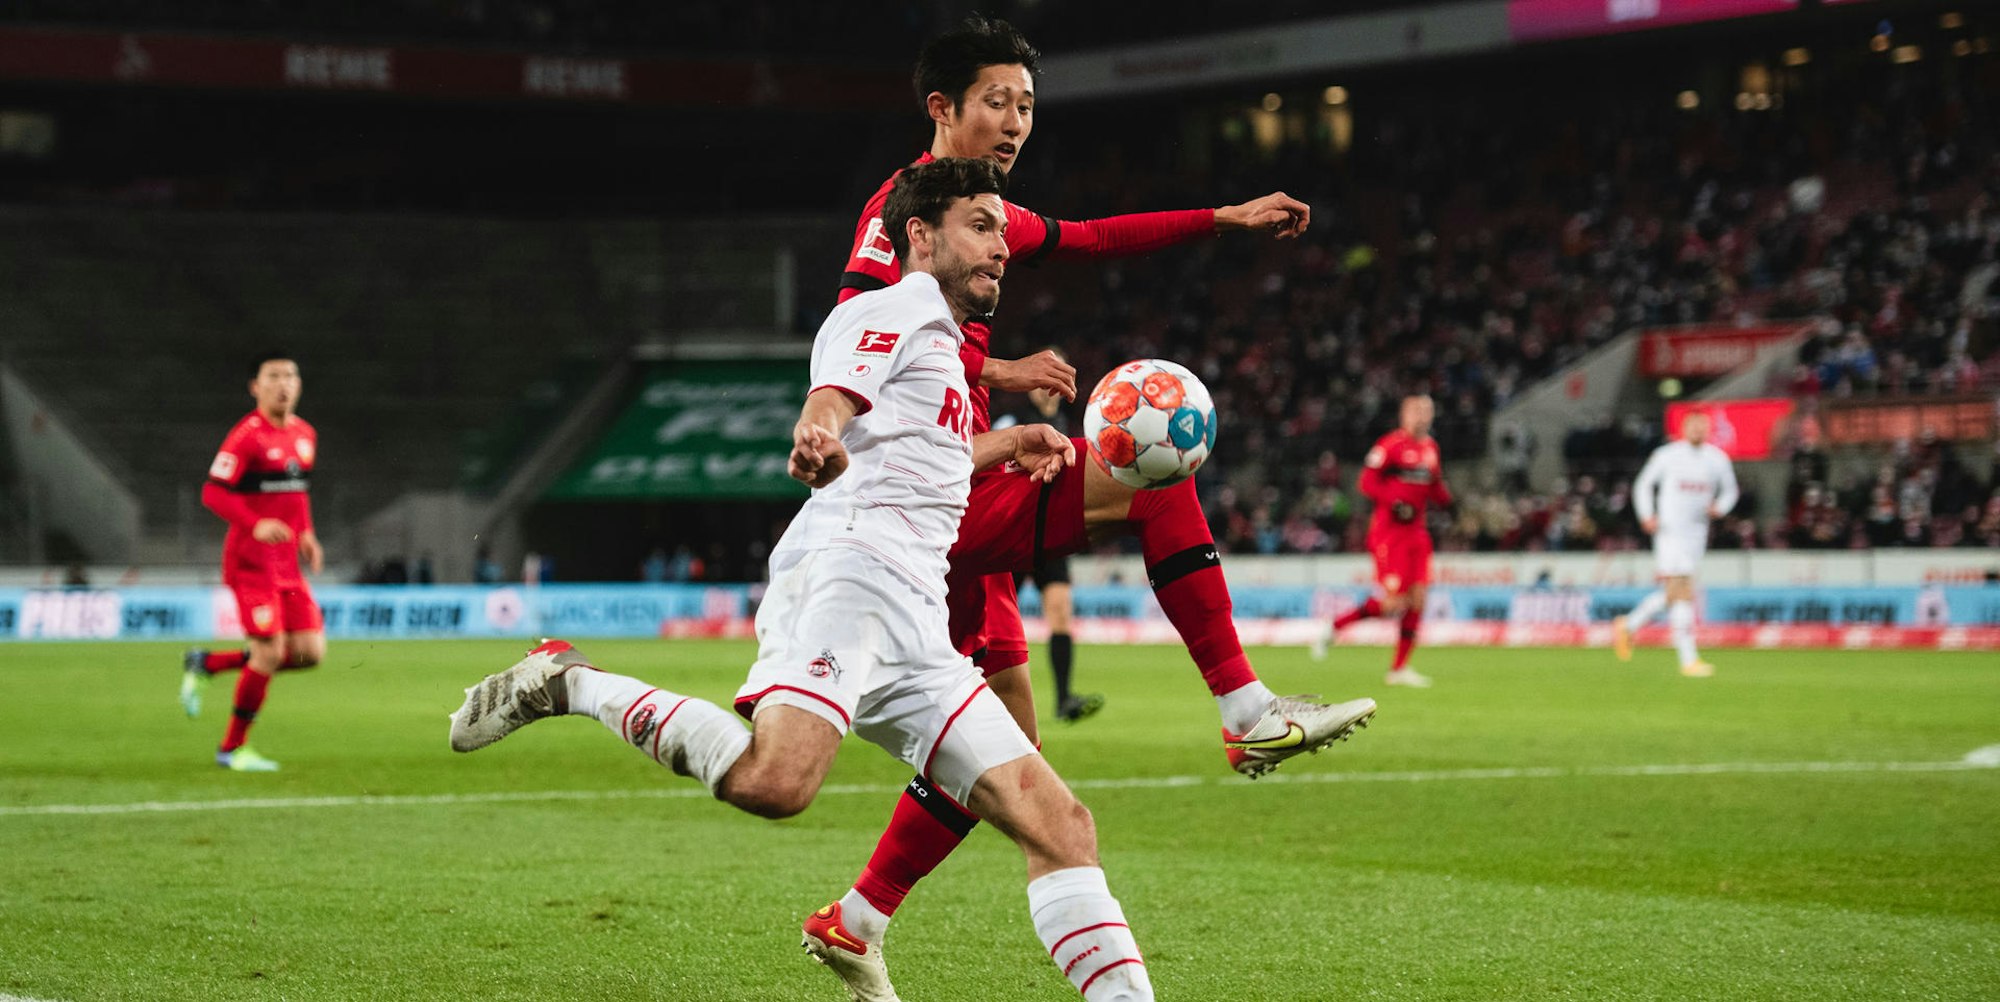 FC vs VfB 17. Spieltag dpa